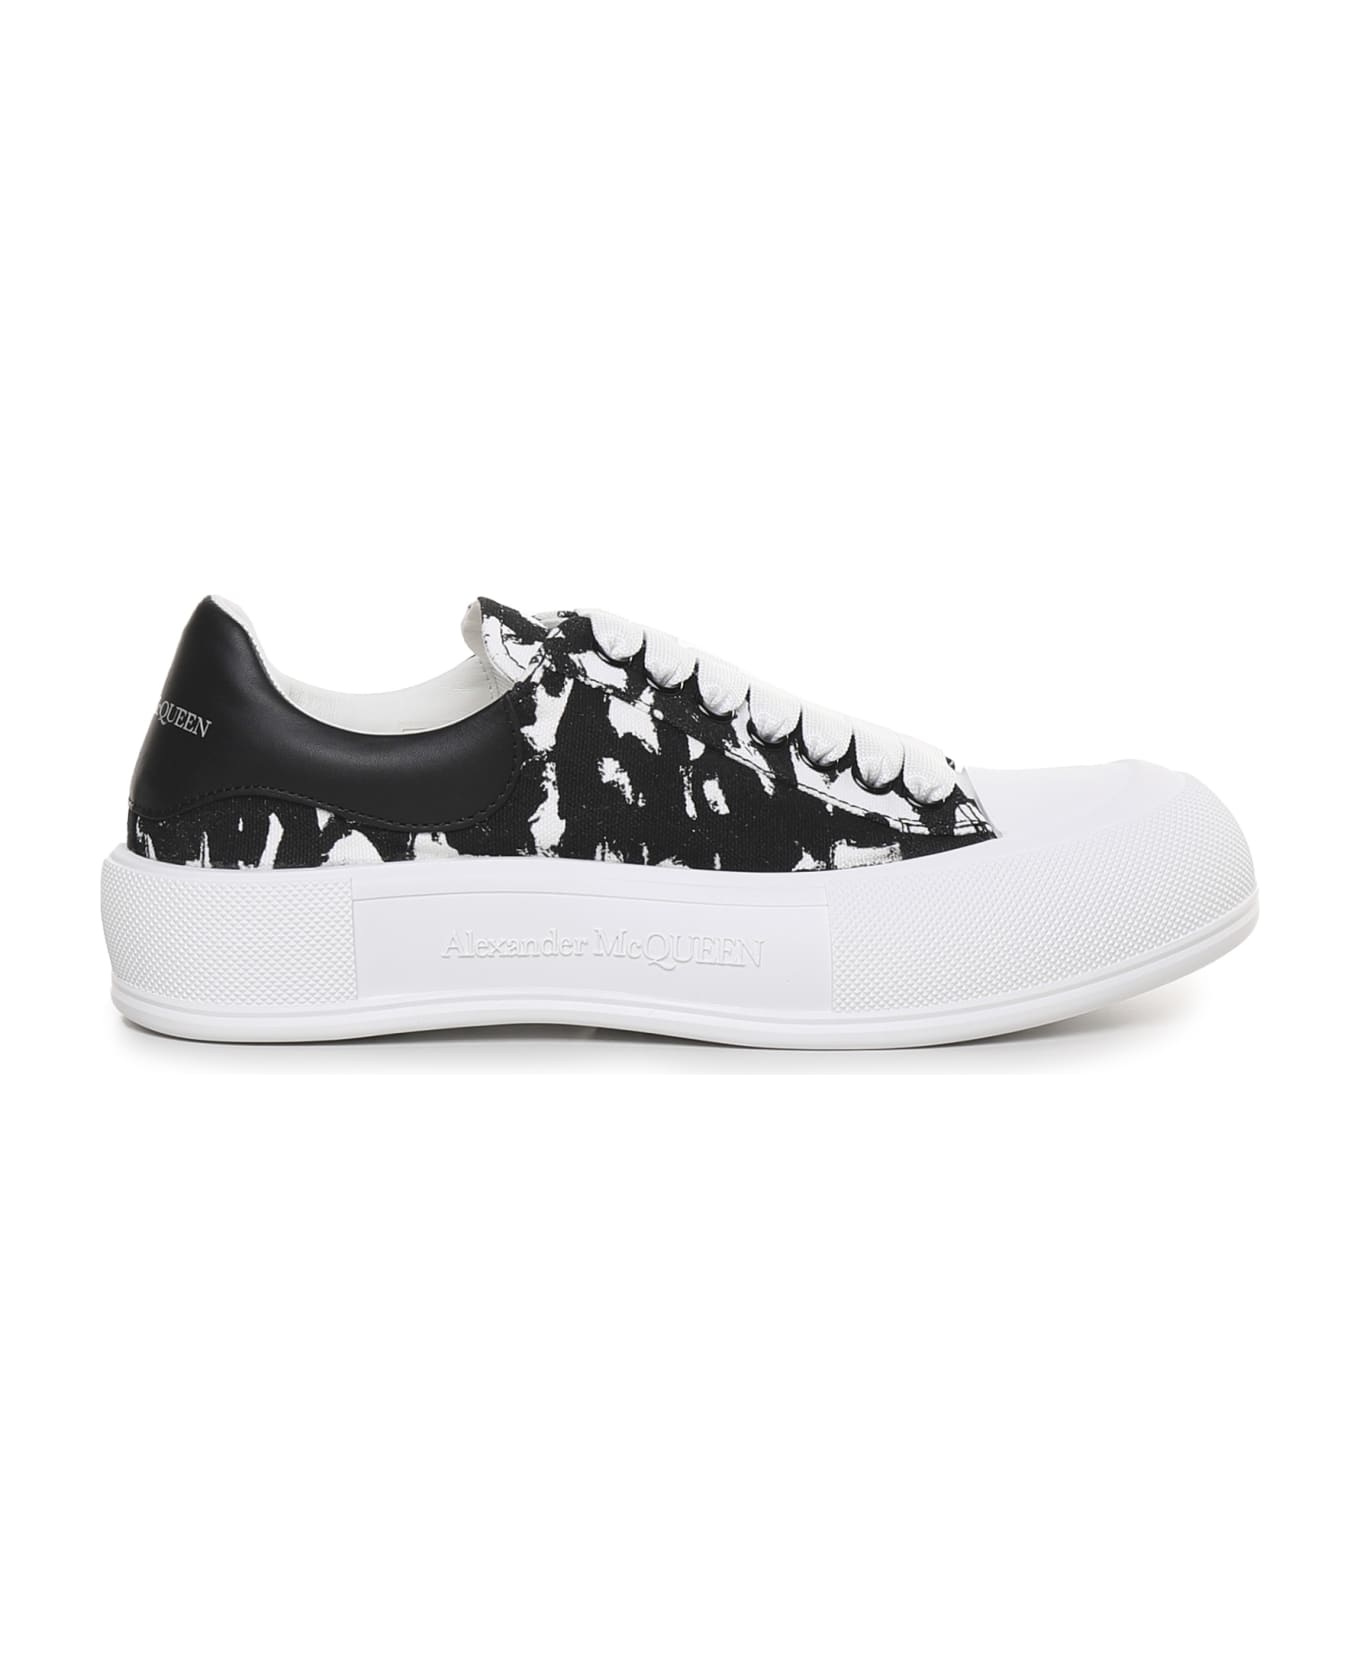 Alexander McQueen Sneakers Deck Plimsoll In Calfskin - White, black スニーカー